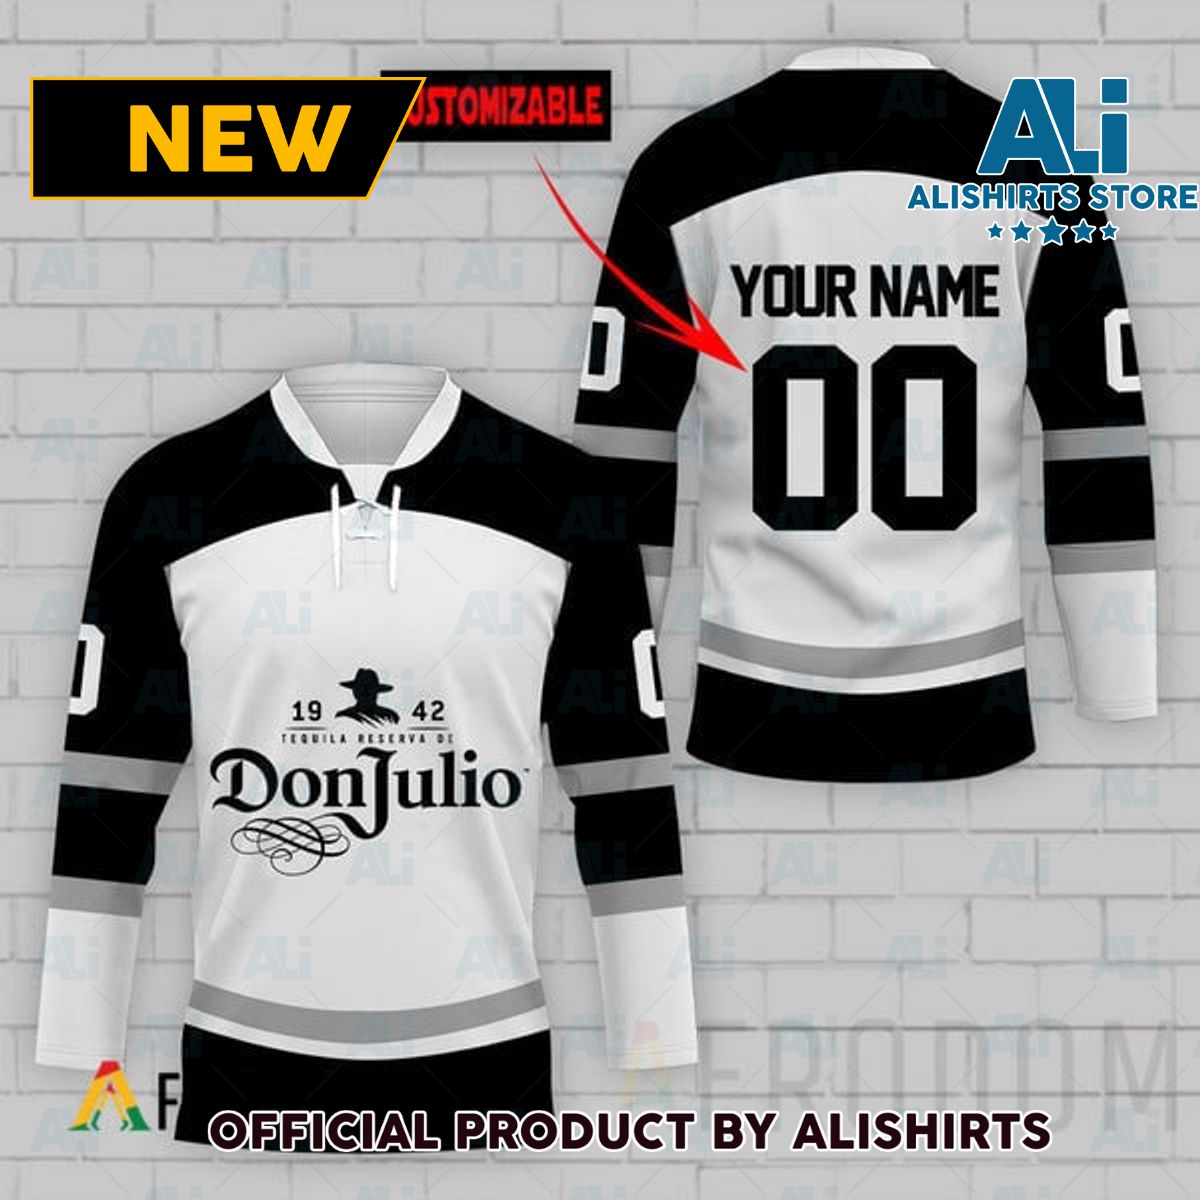 Personalized Don Julio Hockey Jersey